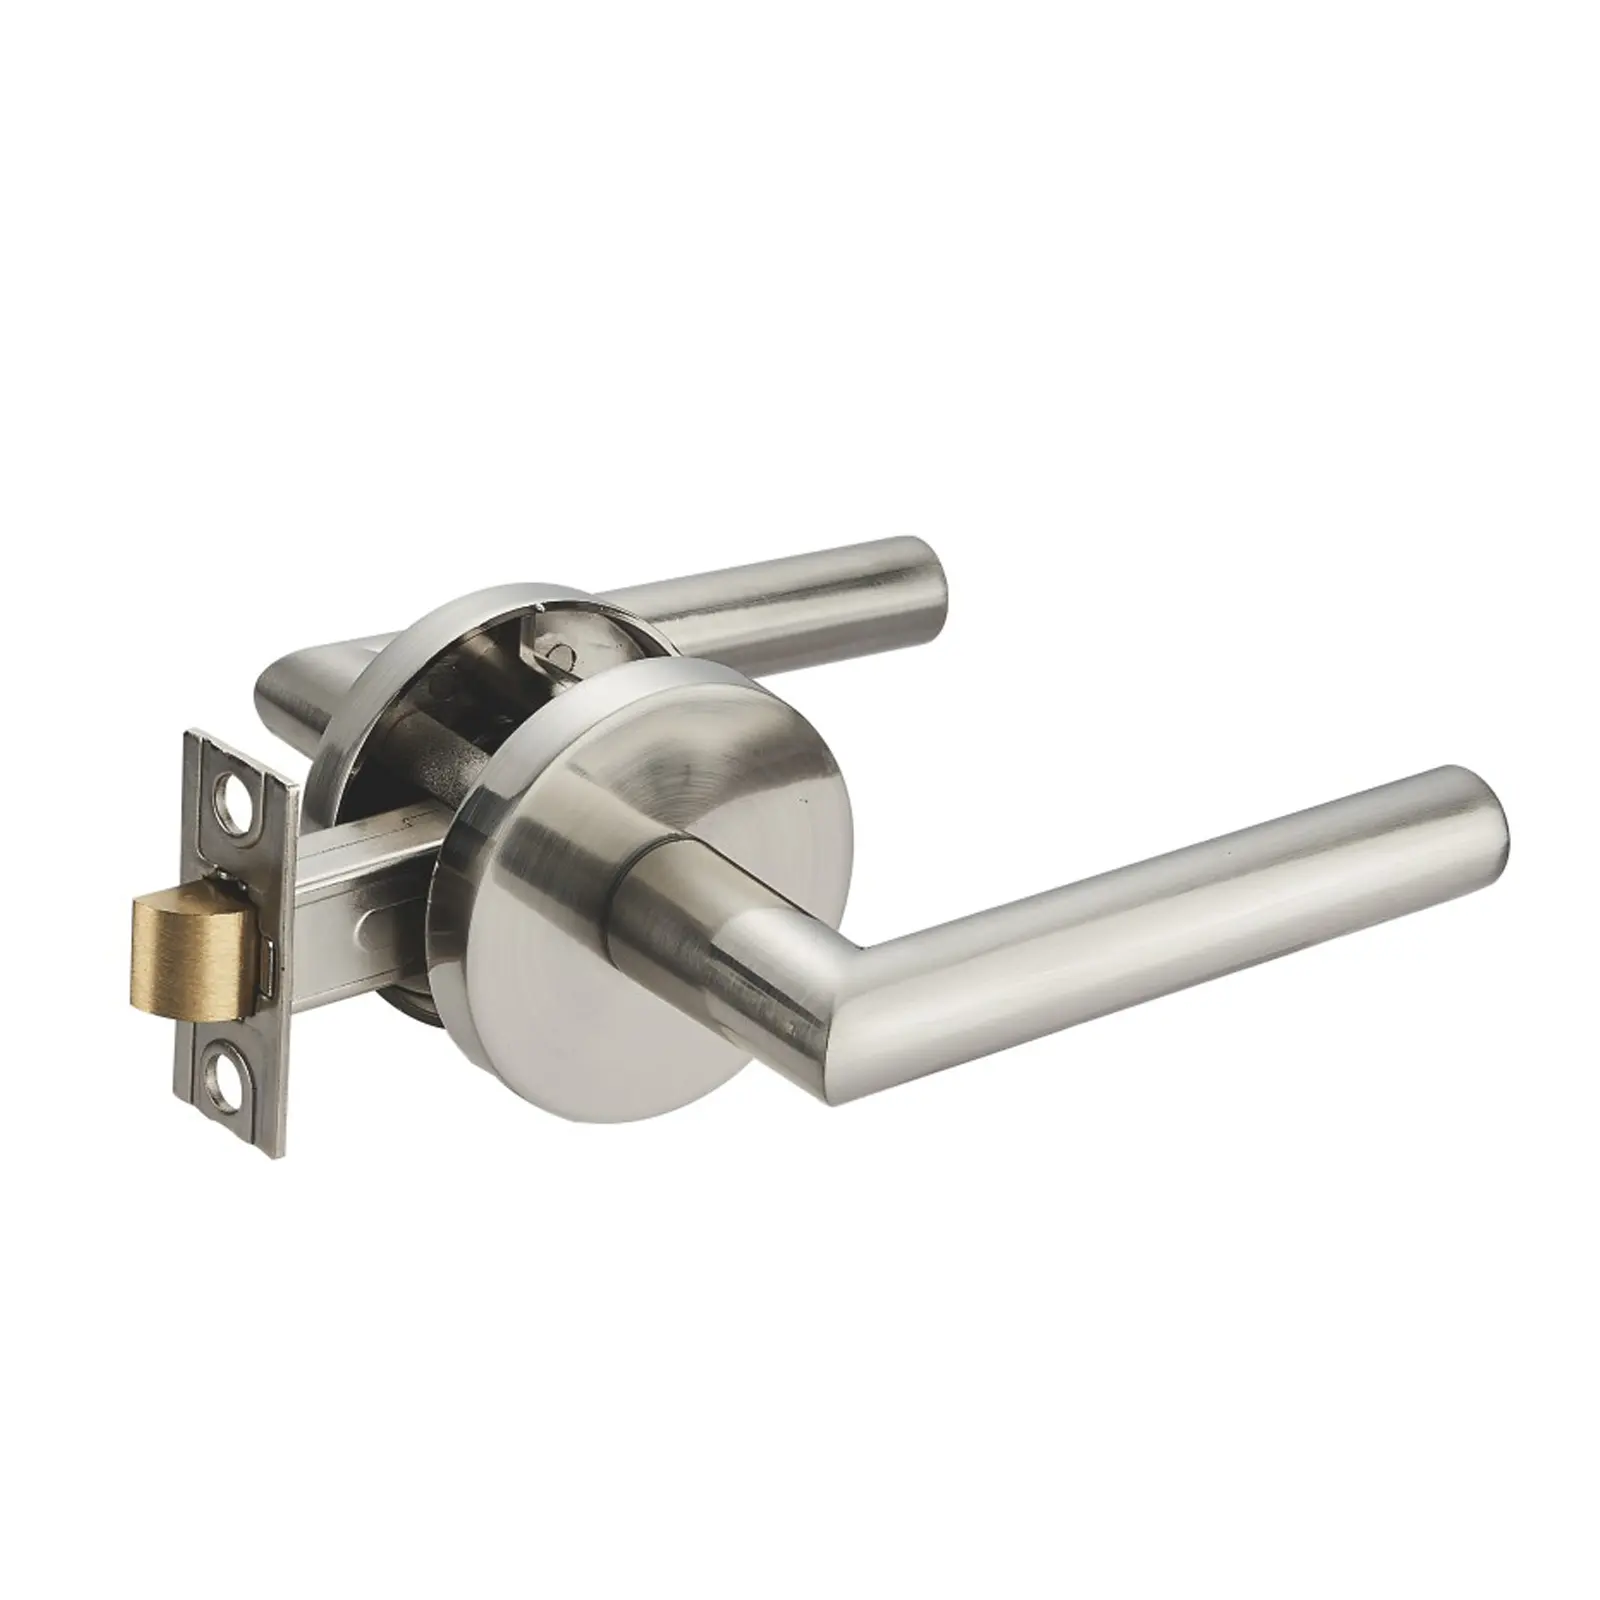 Filta Manufacturer Reasonable Price Tubular Lever Door Handle Push Square Door Cylinder Lock Handle With Good Quality